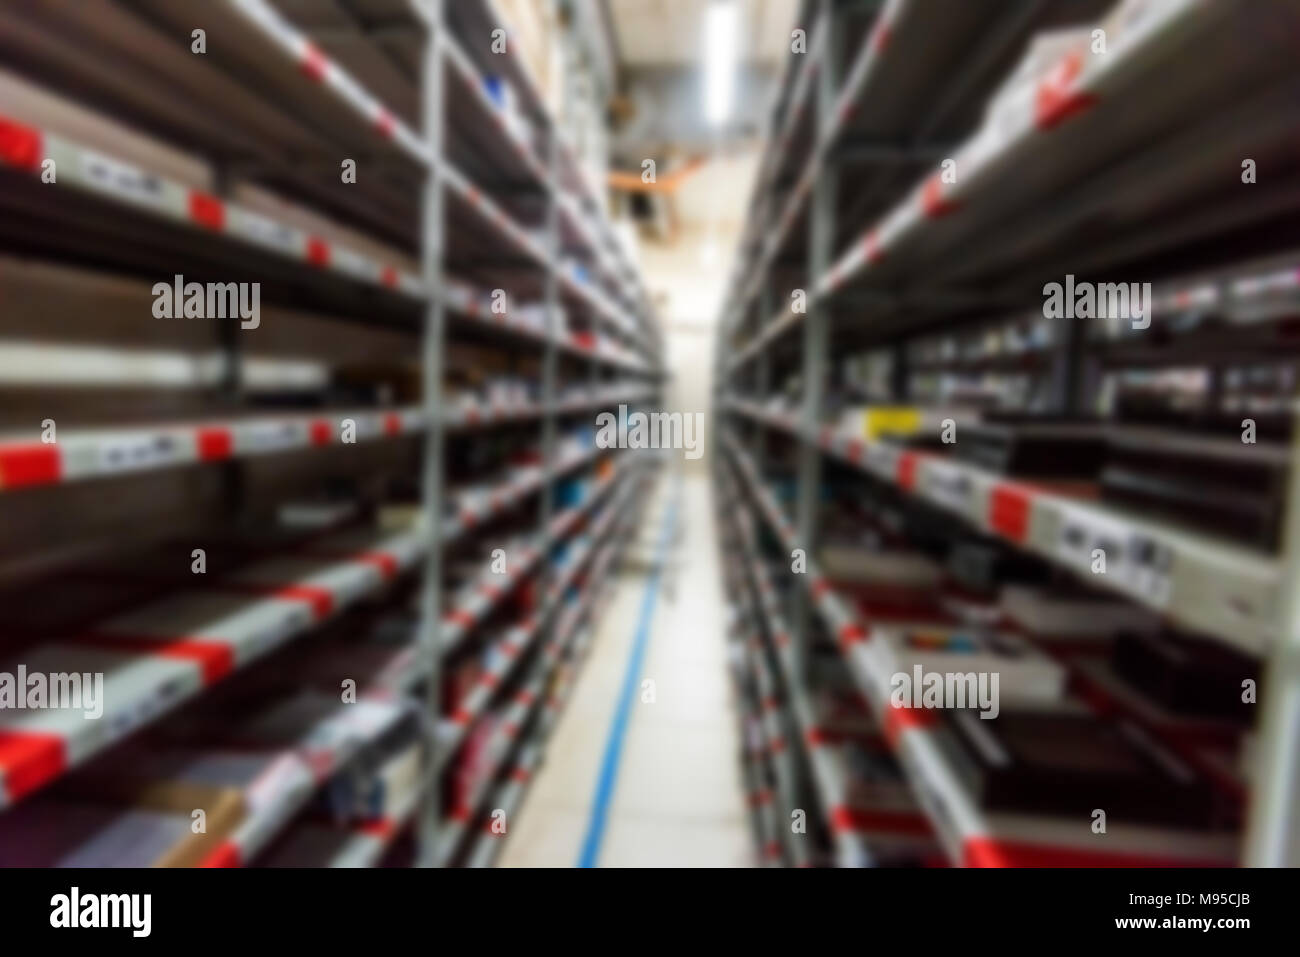 Blurred interior of hardware shop storage Stock Photo